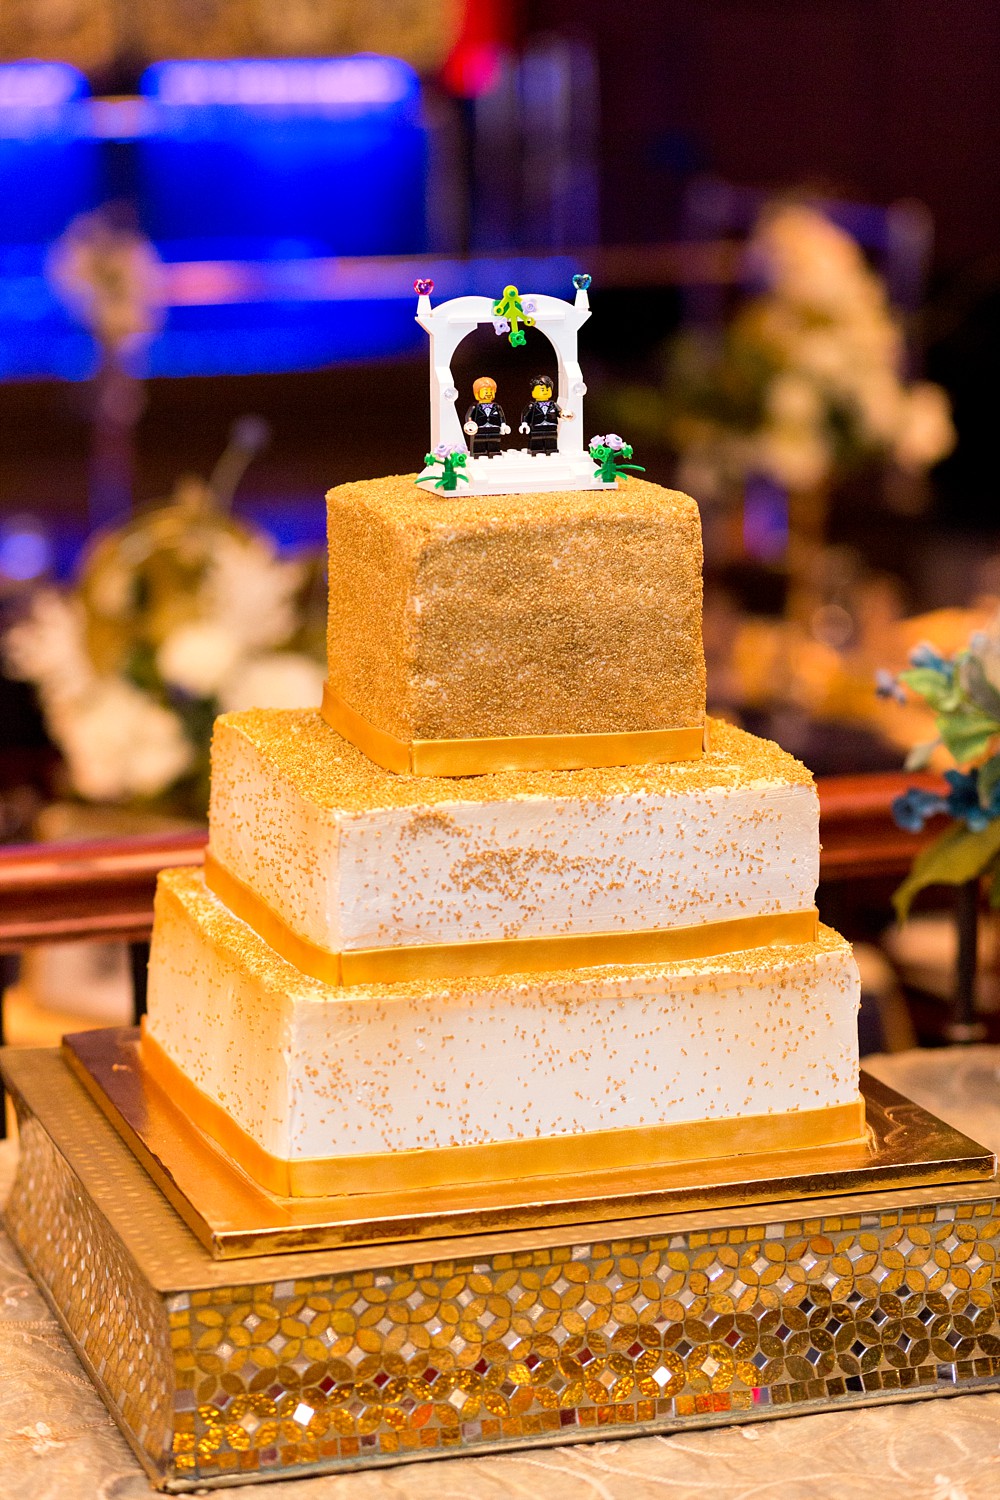 Lego grooms wedding cake topper